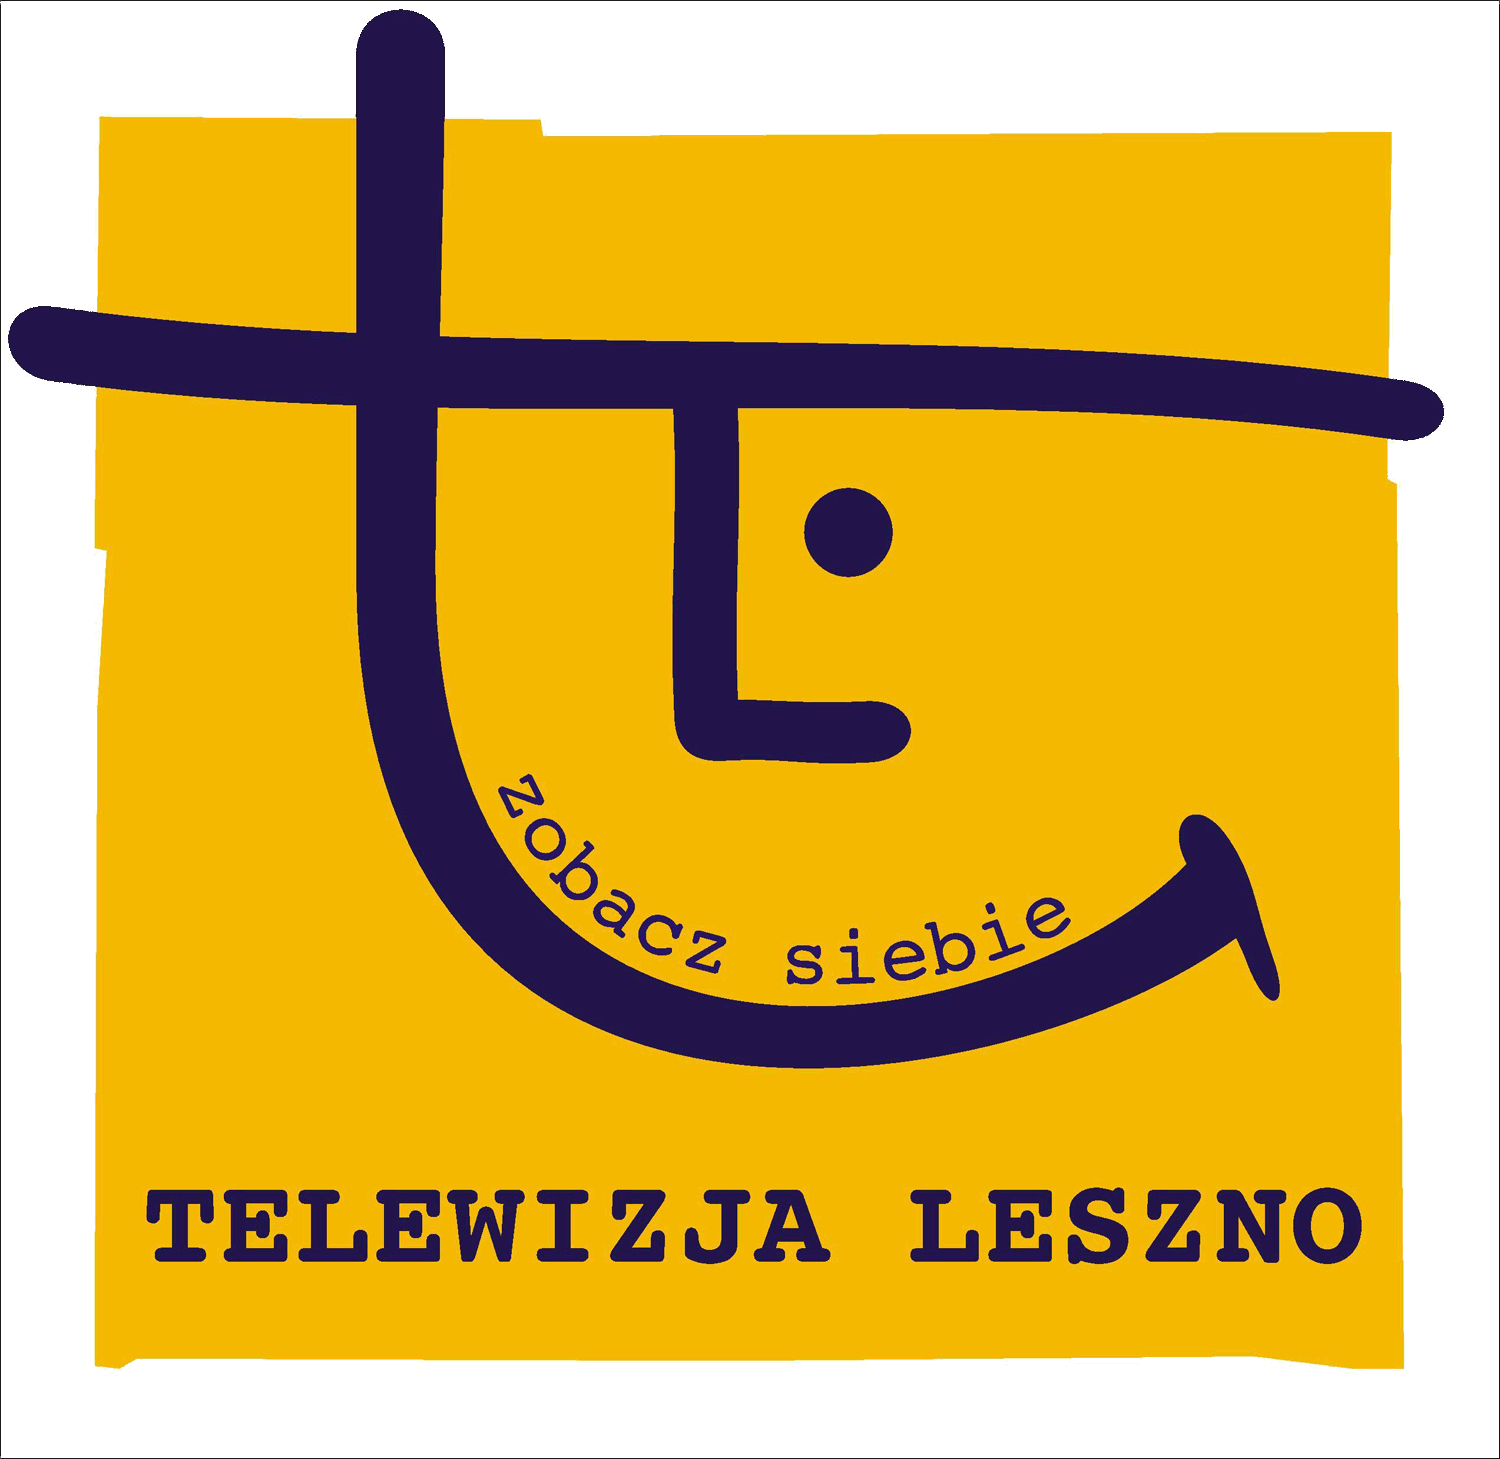 Telewizja Leszno